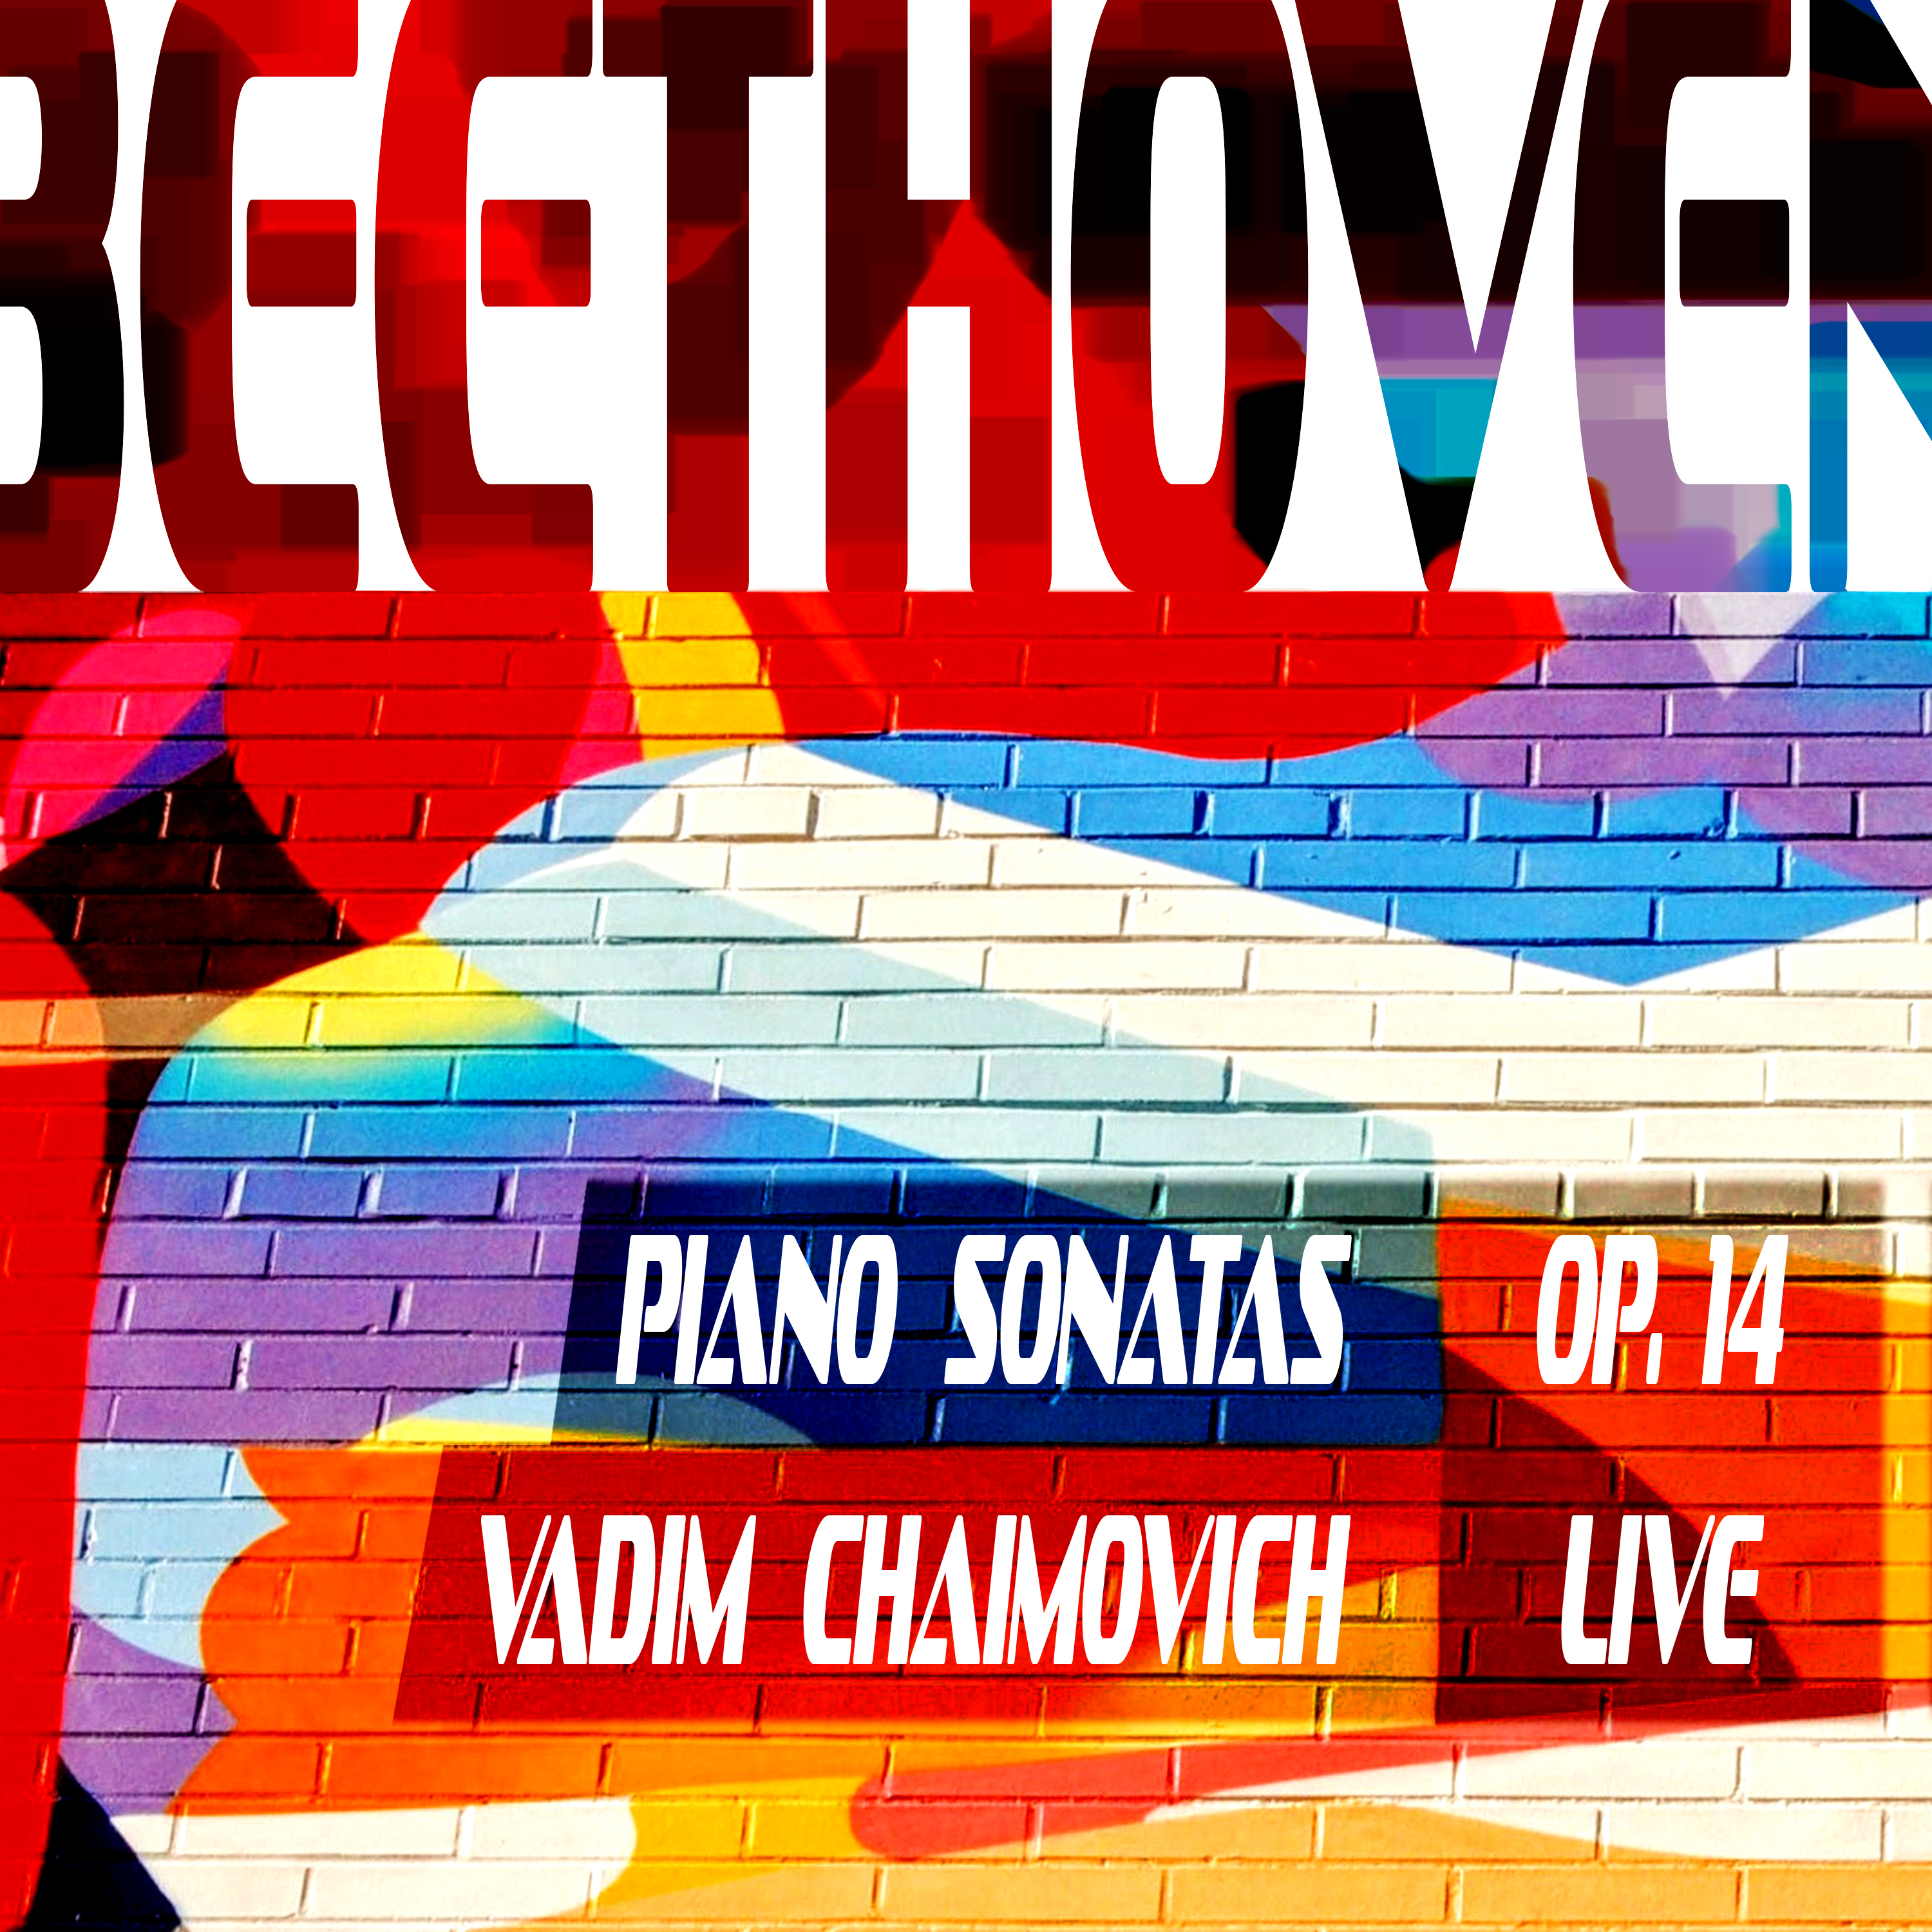 Beethoven: Piano Sonatas, Op. 14 (Live)